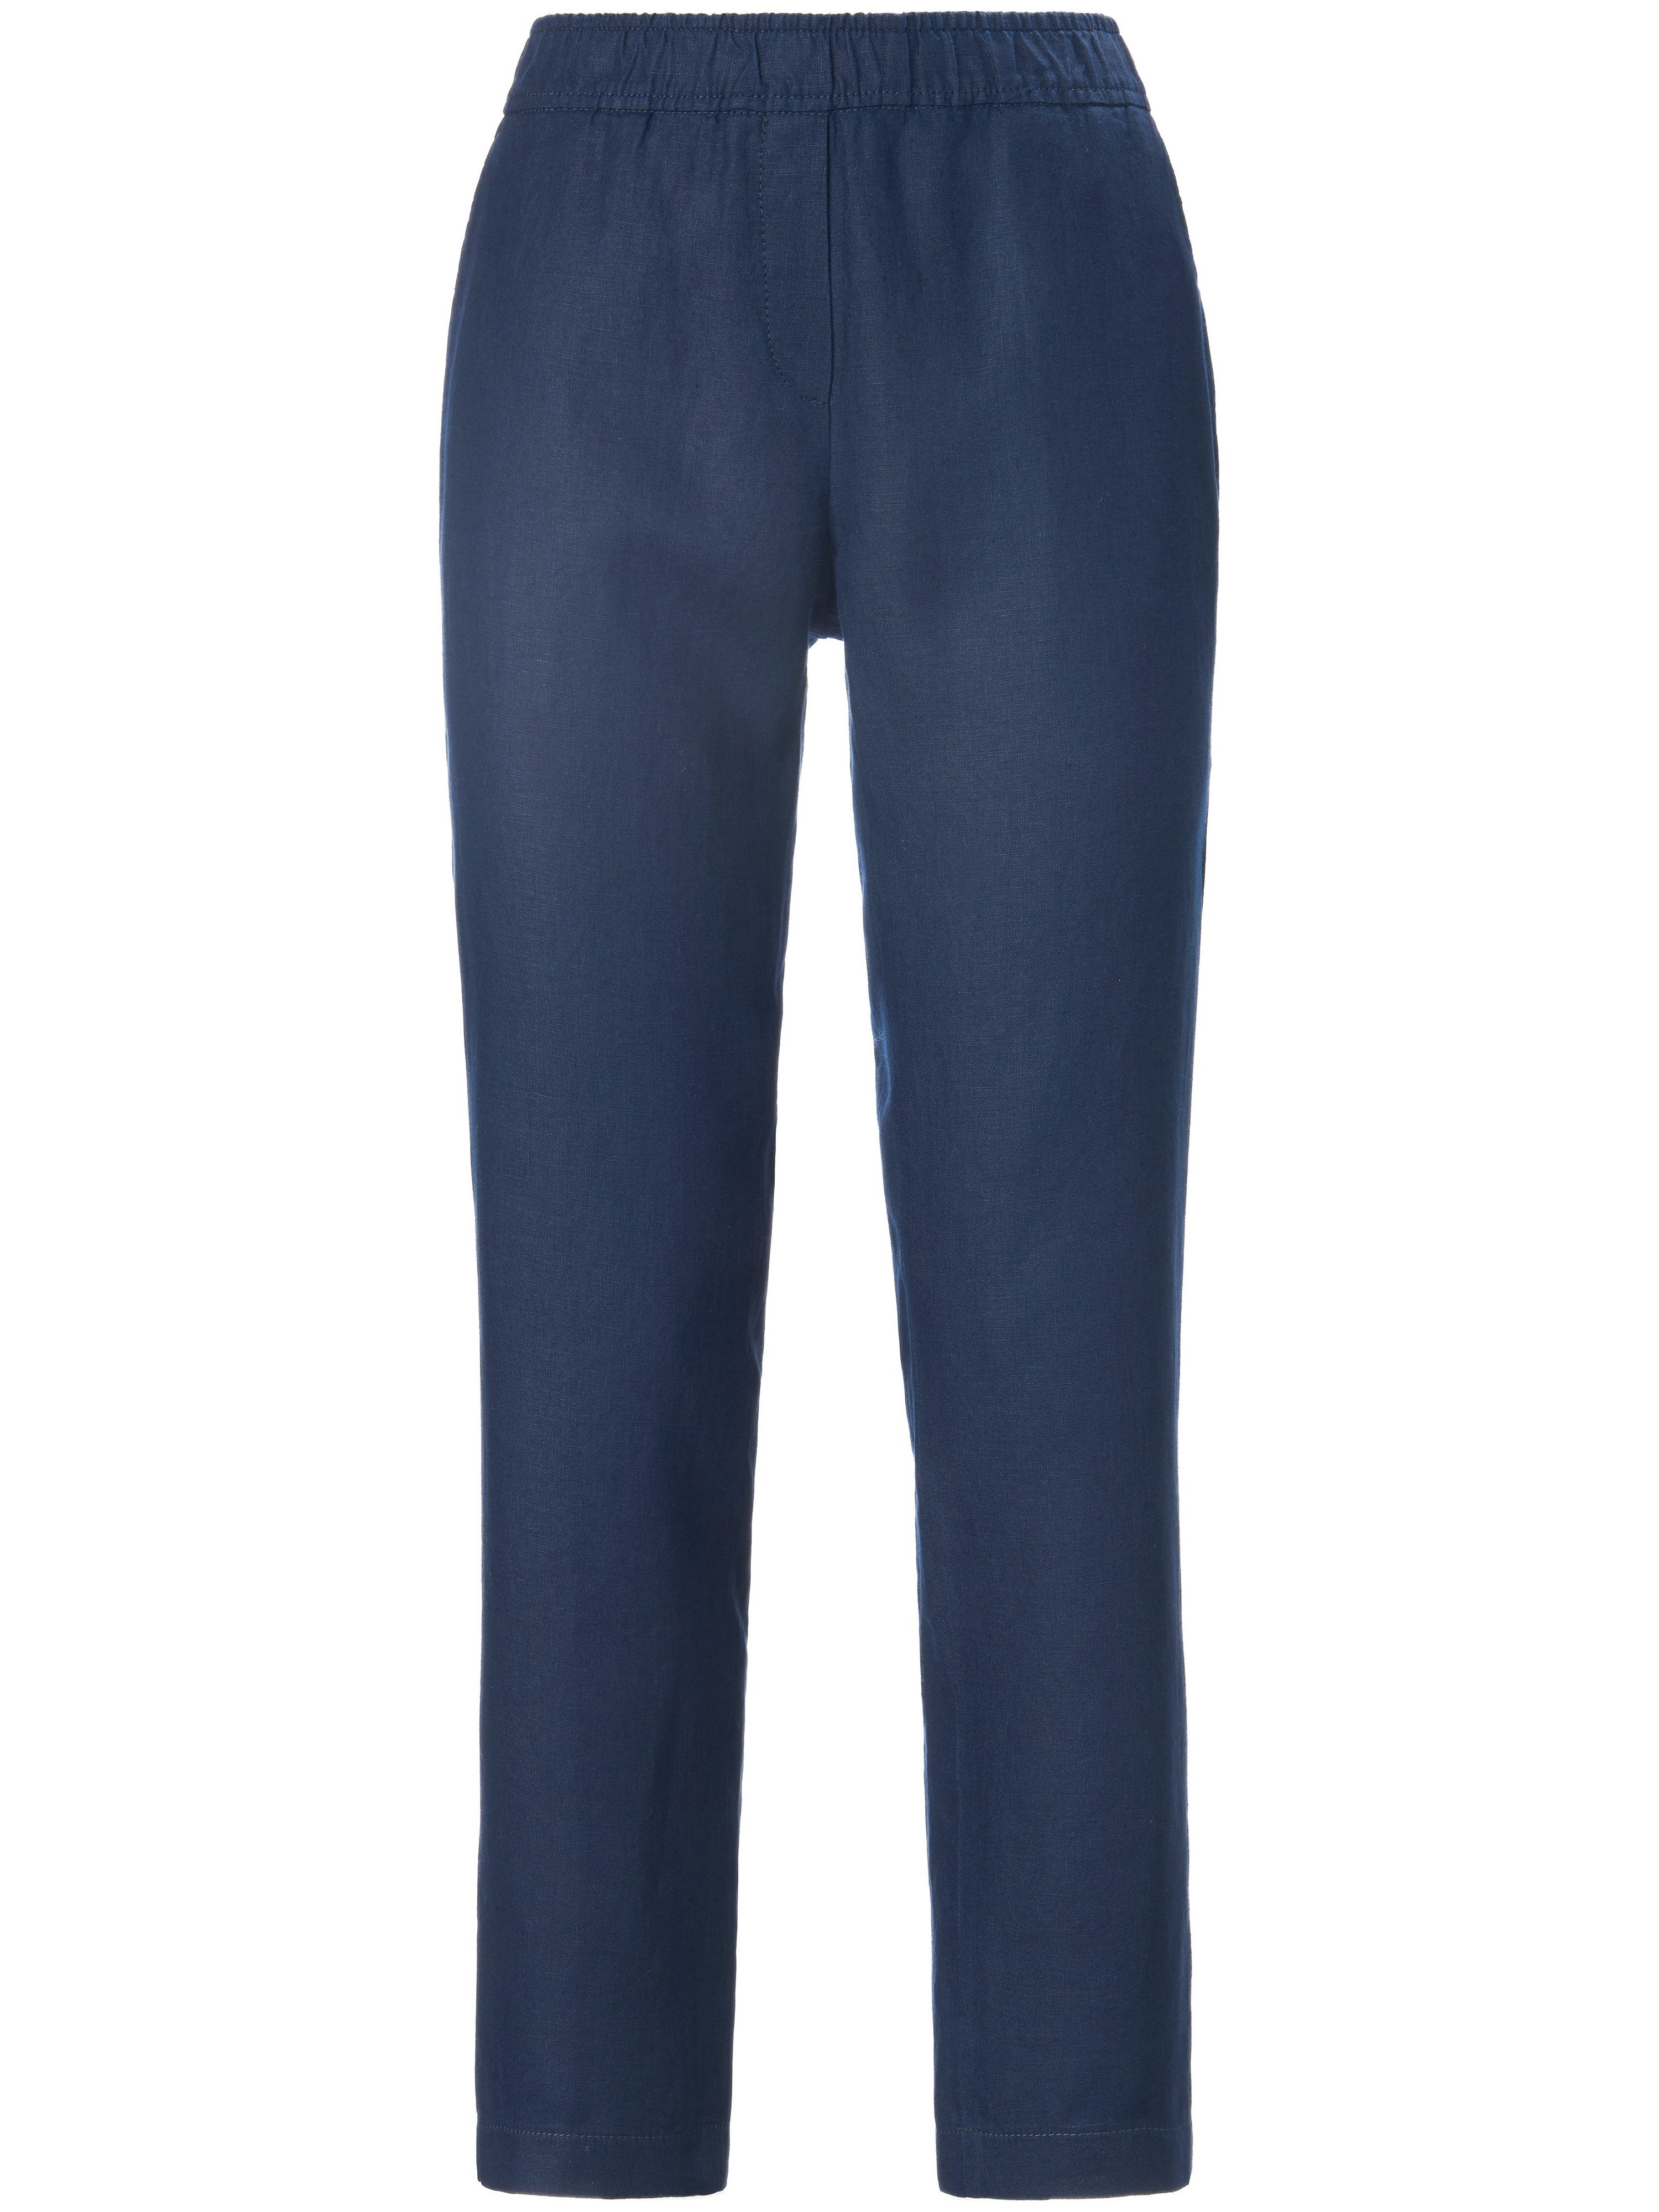 Le pantalon modern fit model Maron  Brax Feel Good bleu